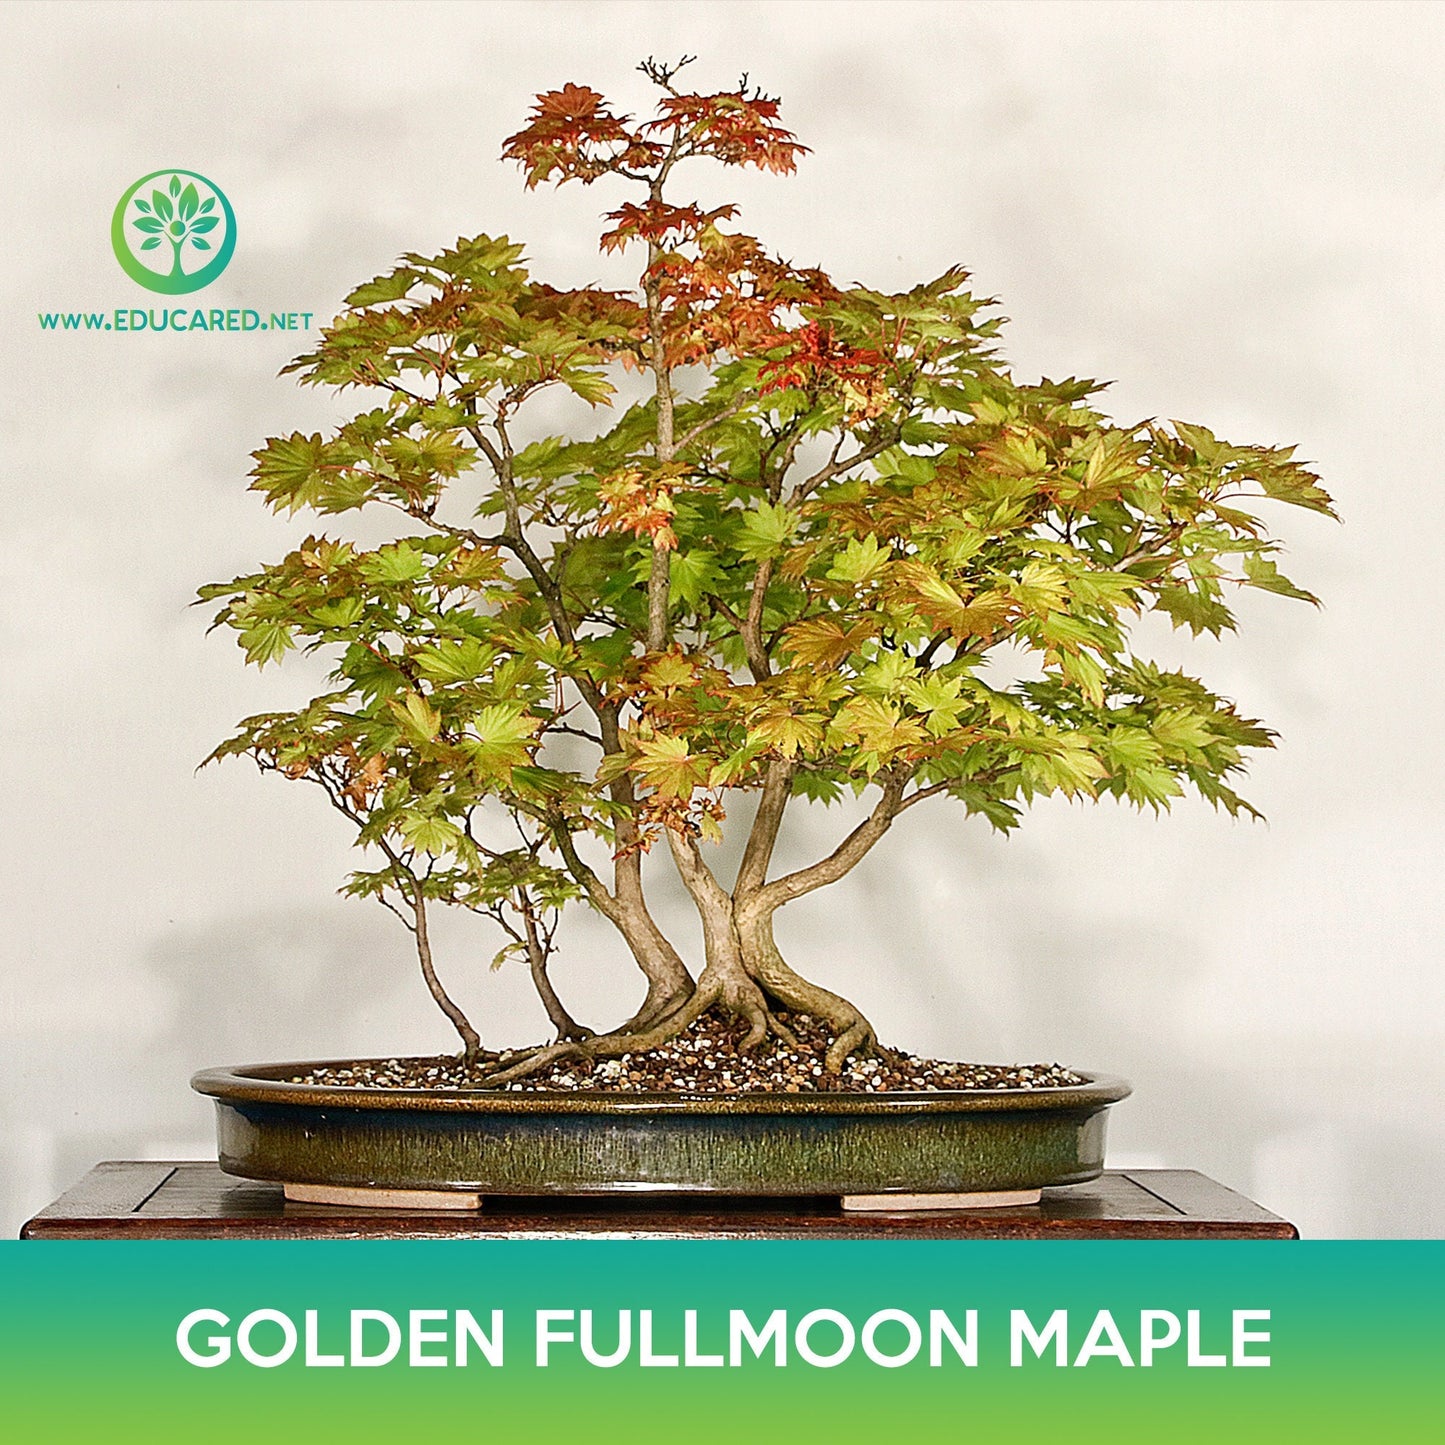 Golden Fullmoon Maple Seeds, Acer shirasawanum var. aureum